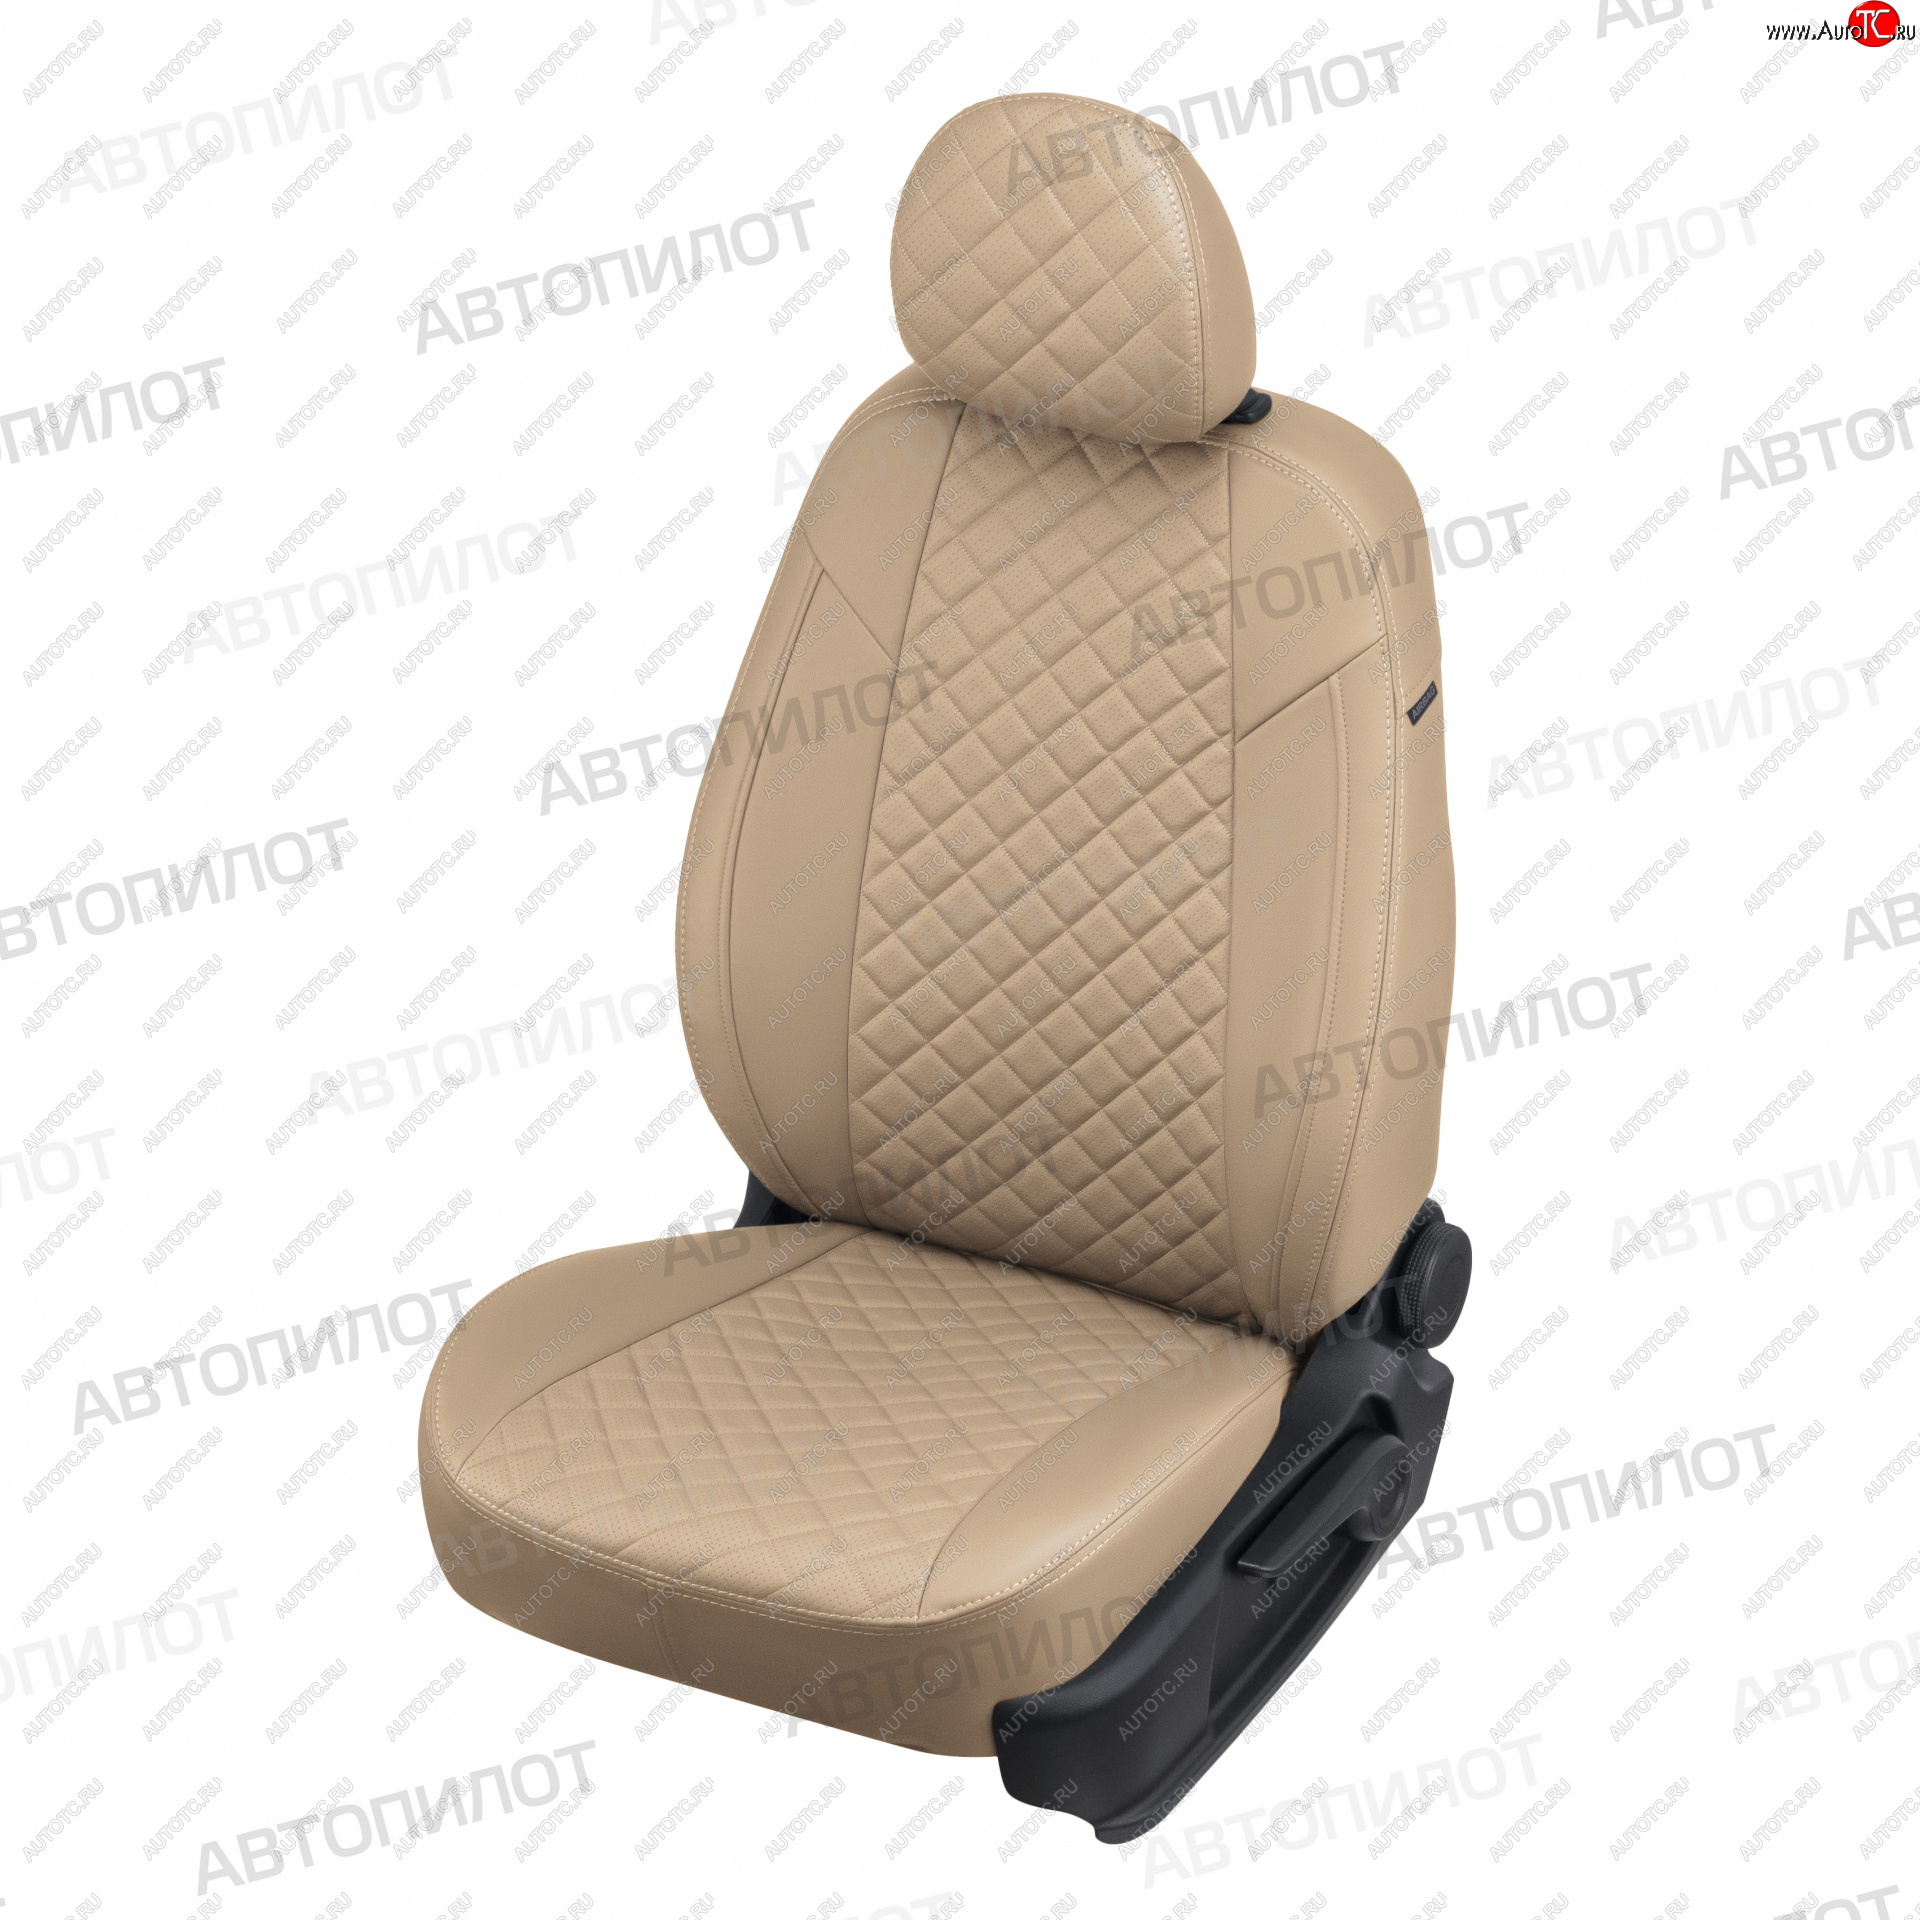 13 999 р. Чехлы сидений (экокожа, сплош.) Автопилот Ромб  Fiat Albea  170 (2002-2012) (темно-бежевый)